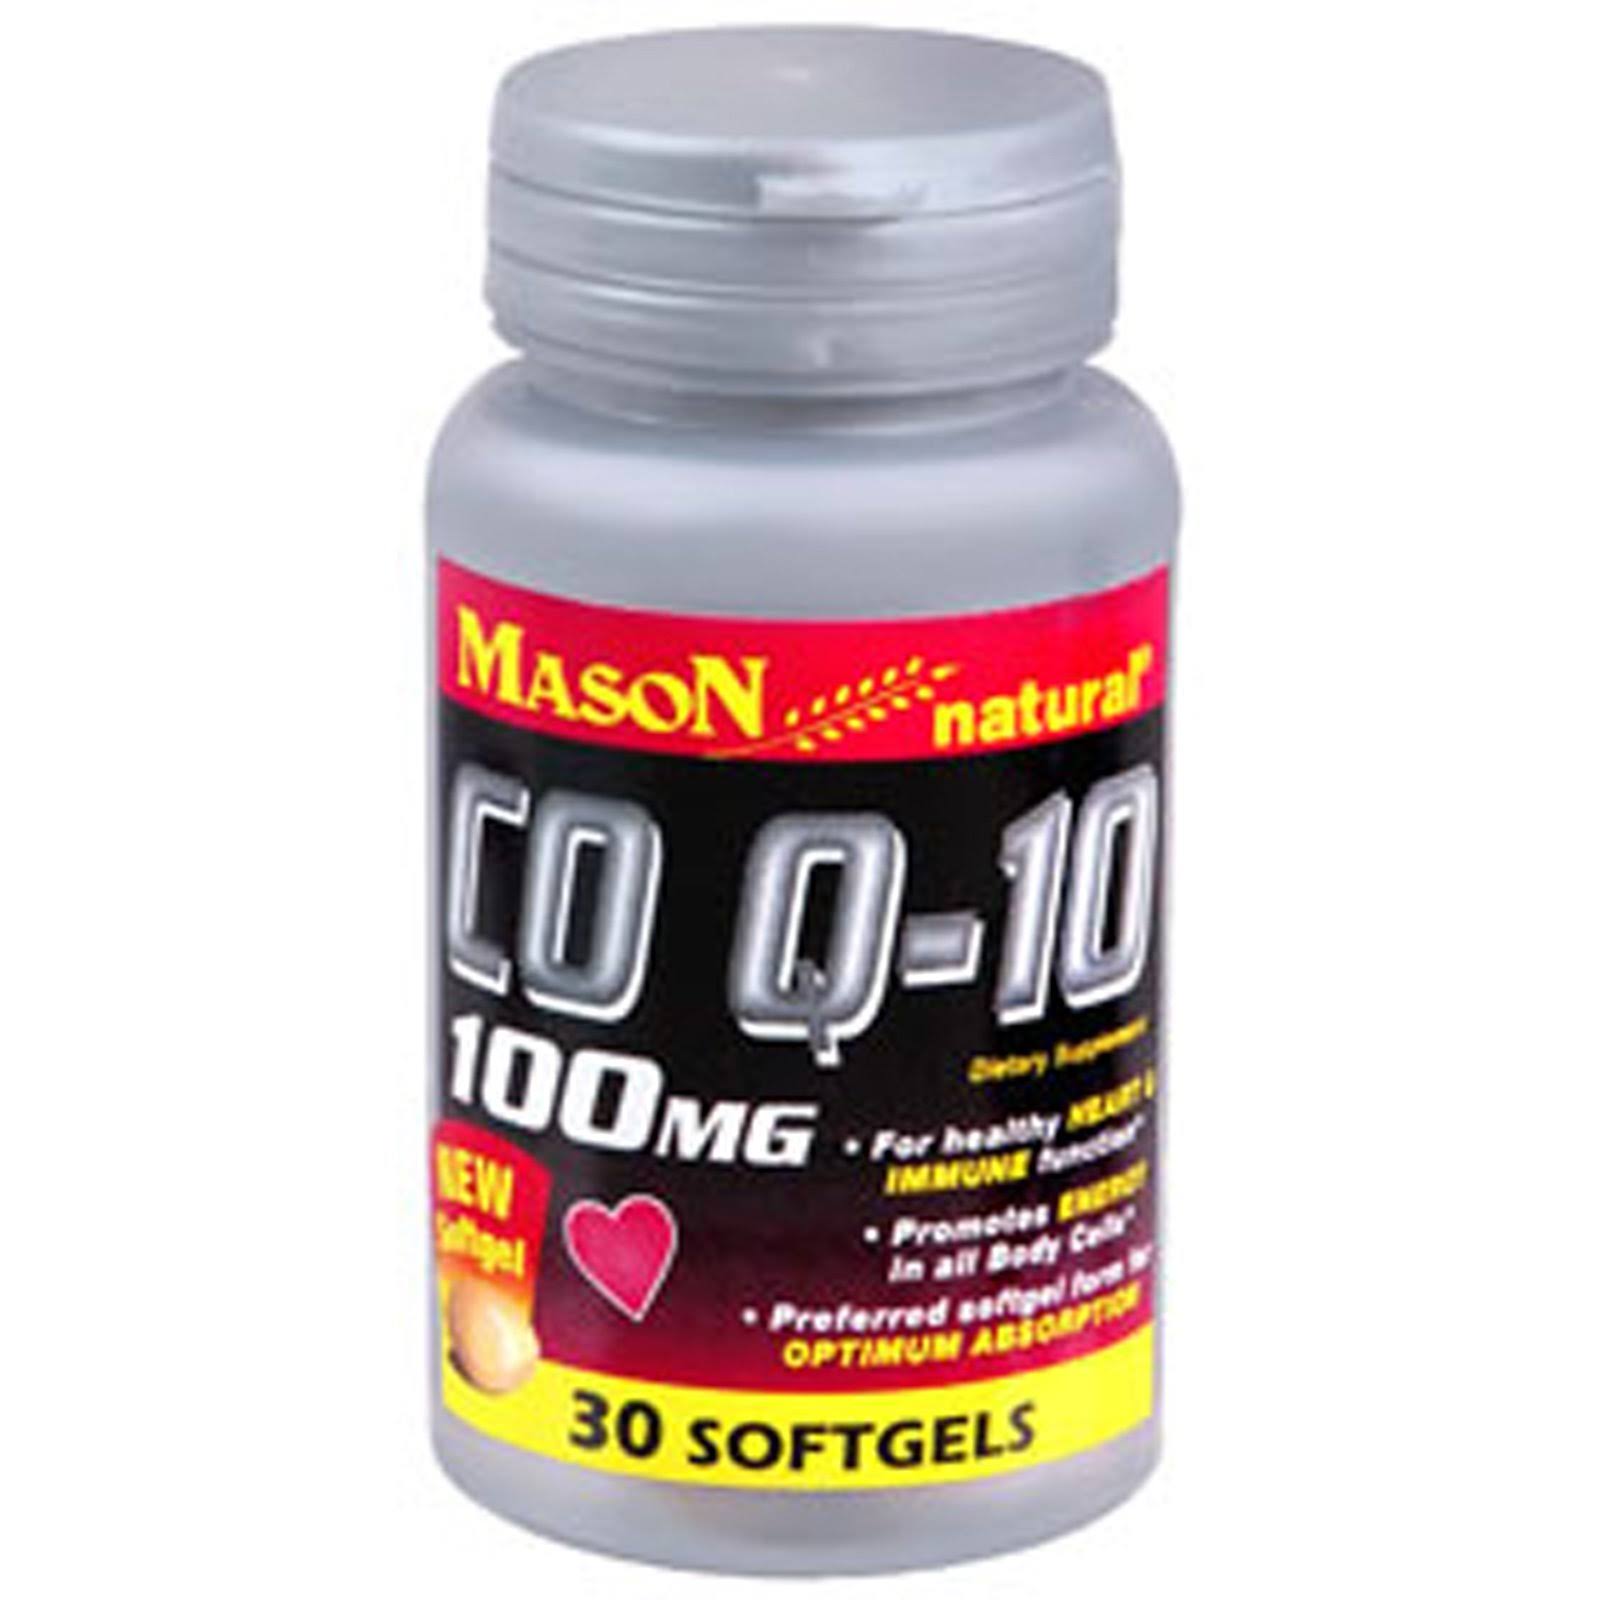 Mason Natural CO Q-10 Supplement - 30 Softgels, 100mg